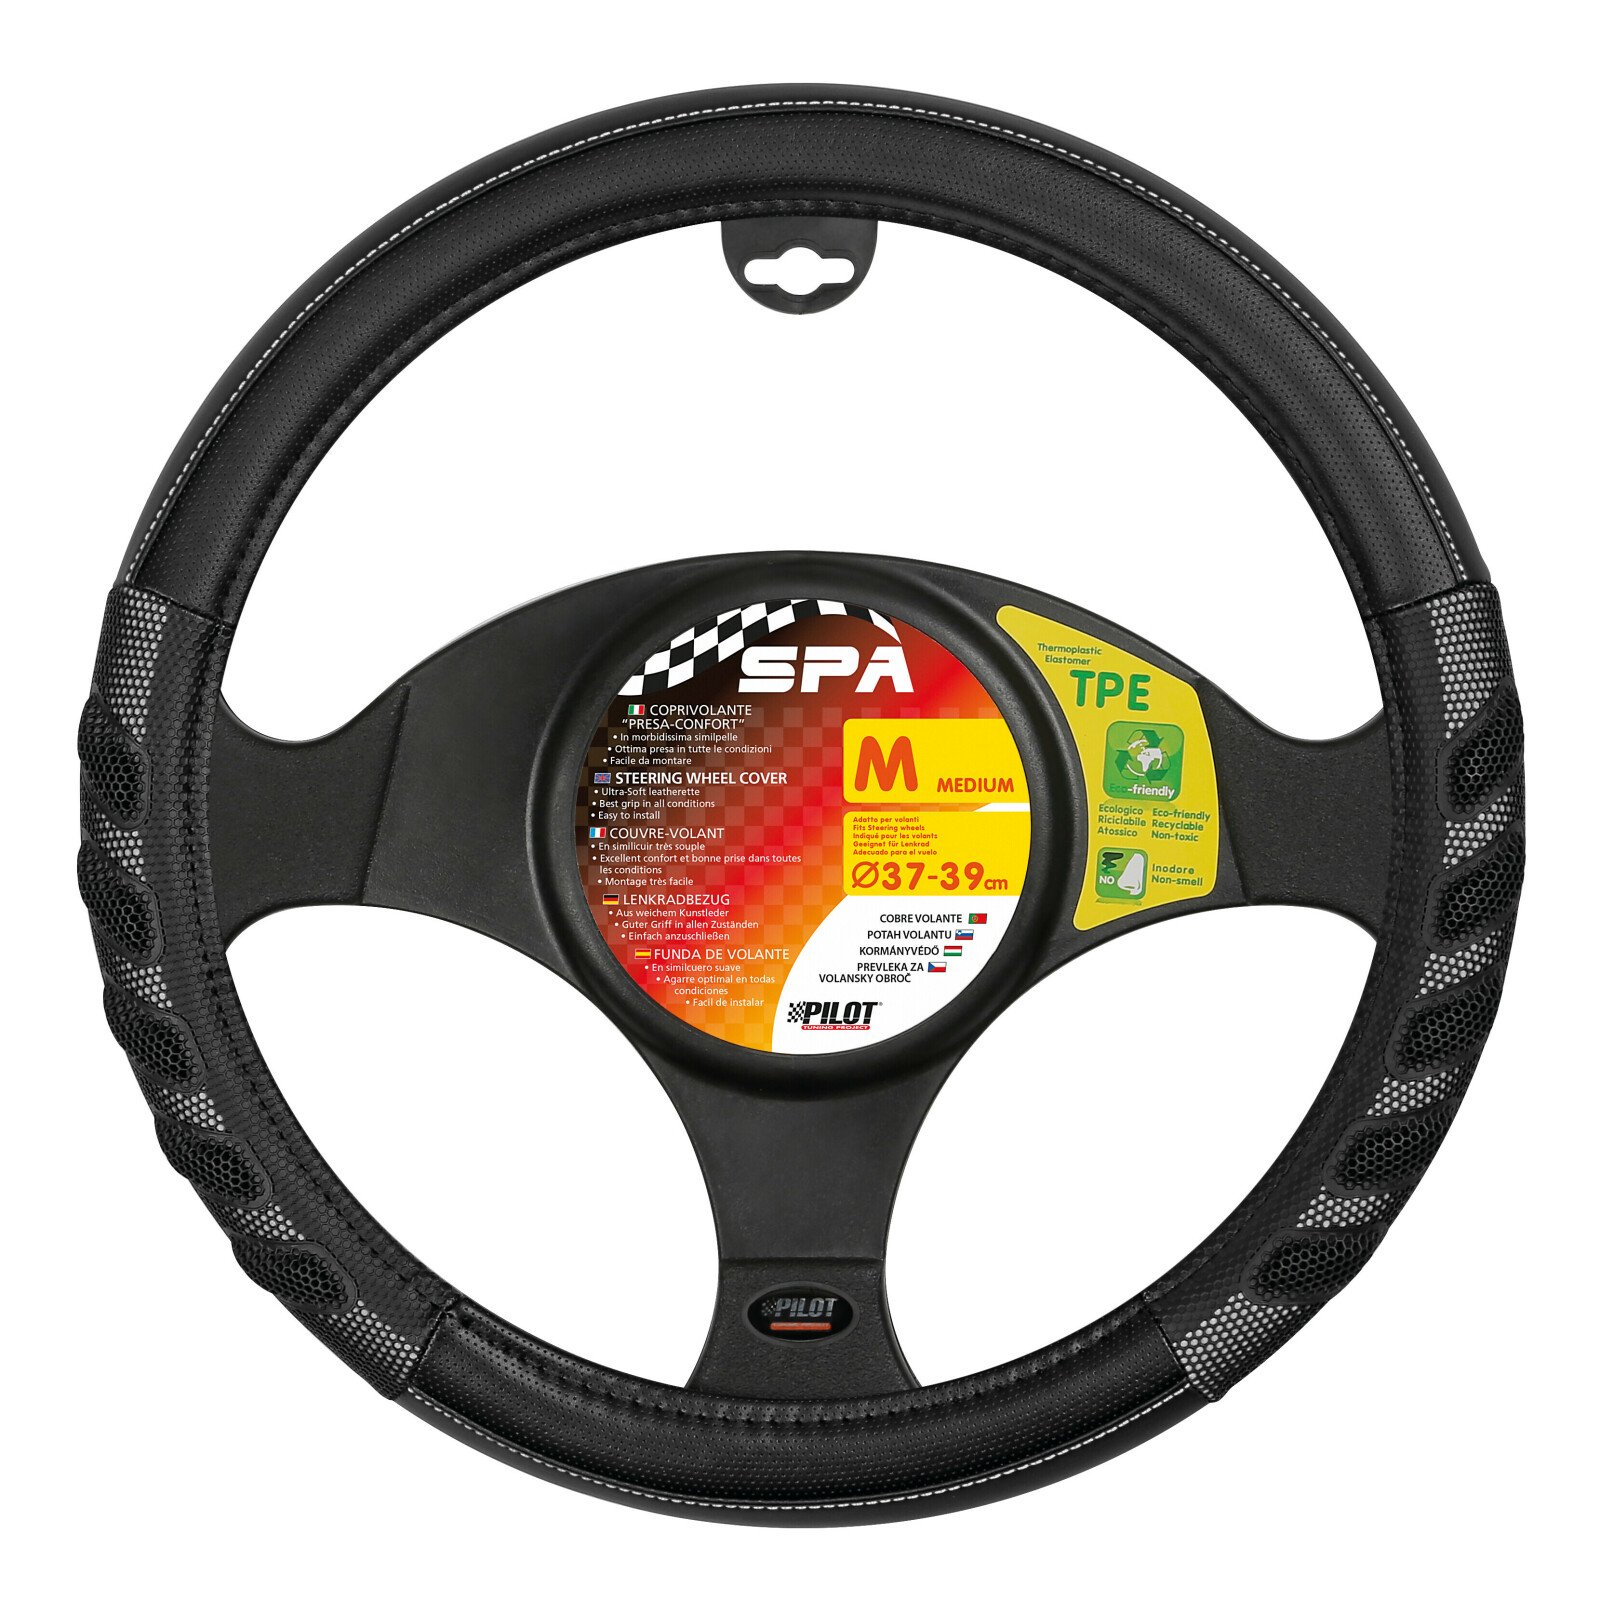 Spa leatherette steering wheel cover - M - Ø 37/39 cm - Black/Grey thumb